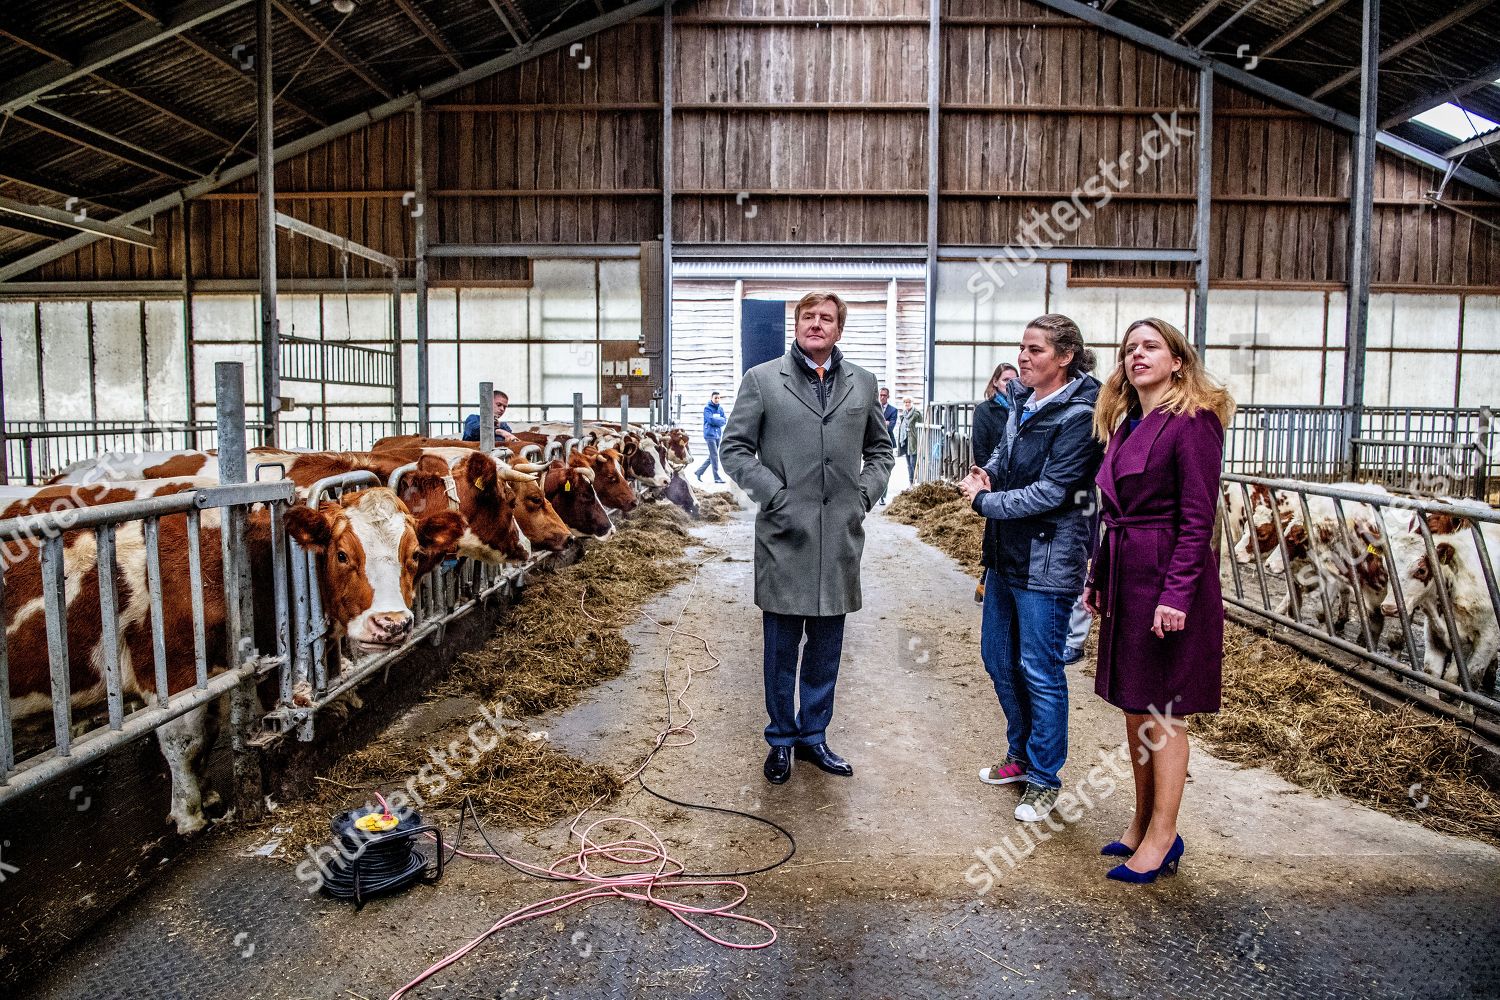 visit-to-dairy-farm-groot-steinfort-joppe-netherlands-shutterstock-editorial-9996881bo.jpg